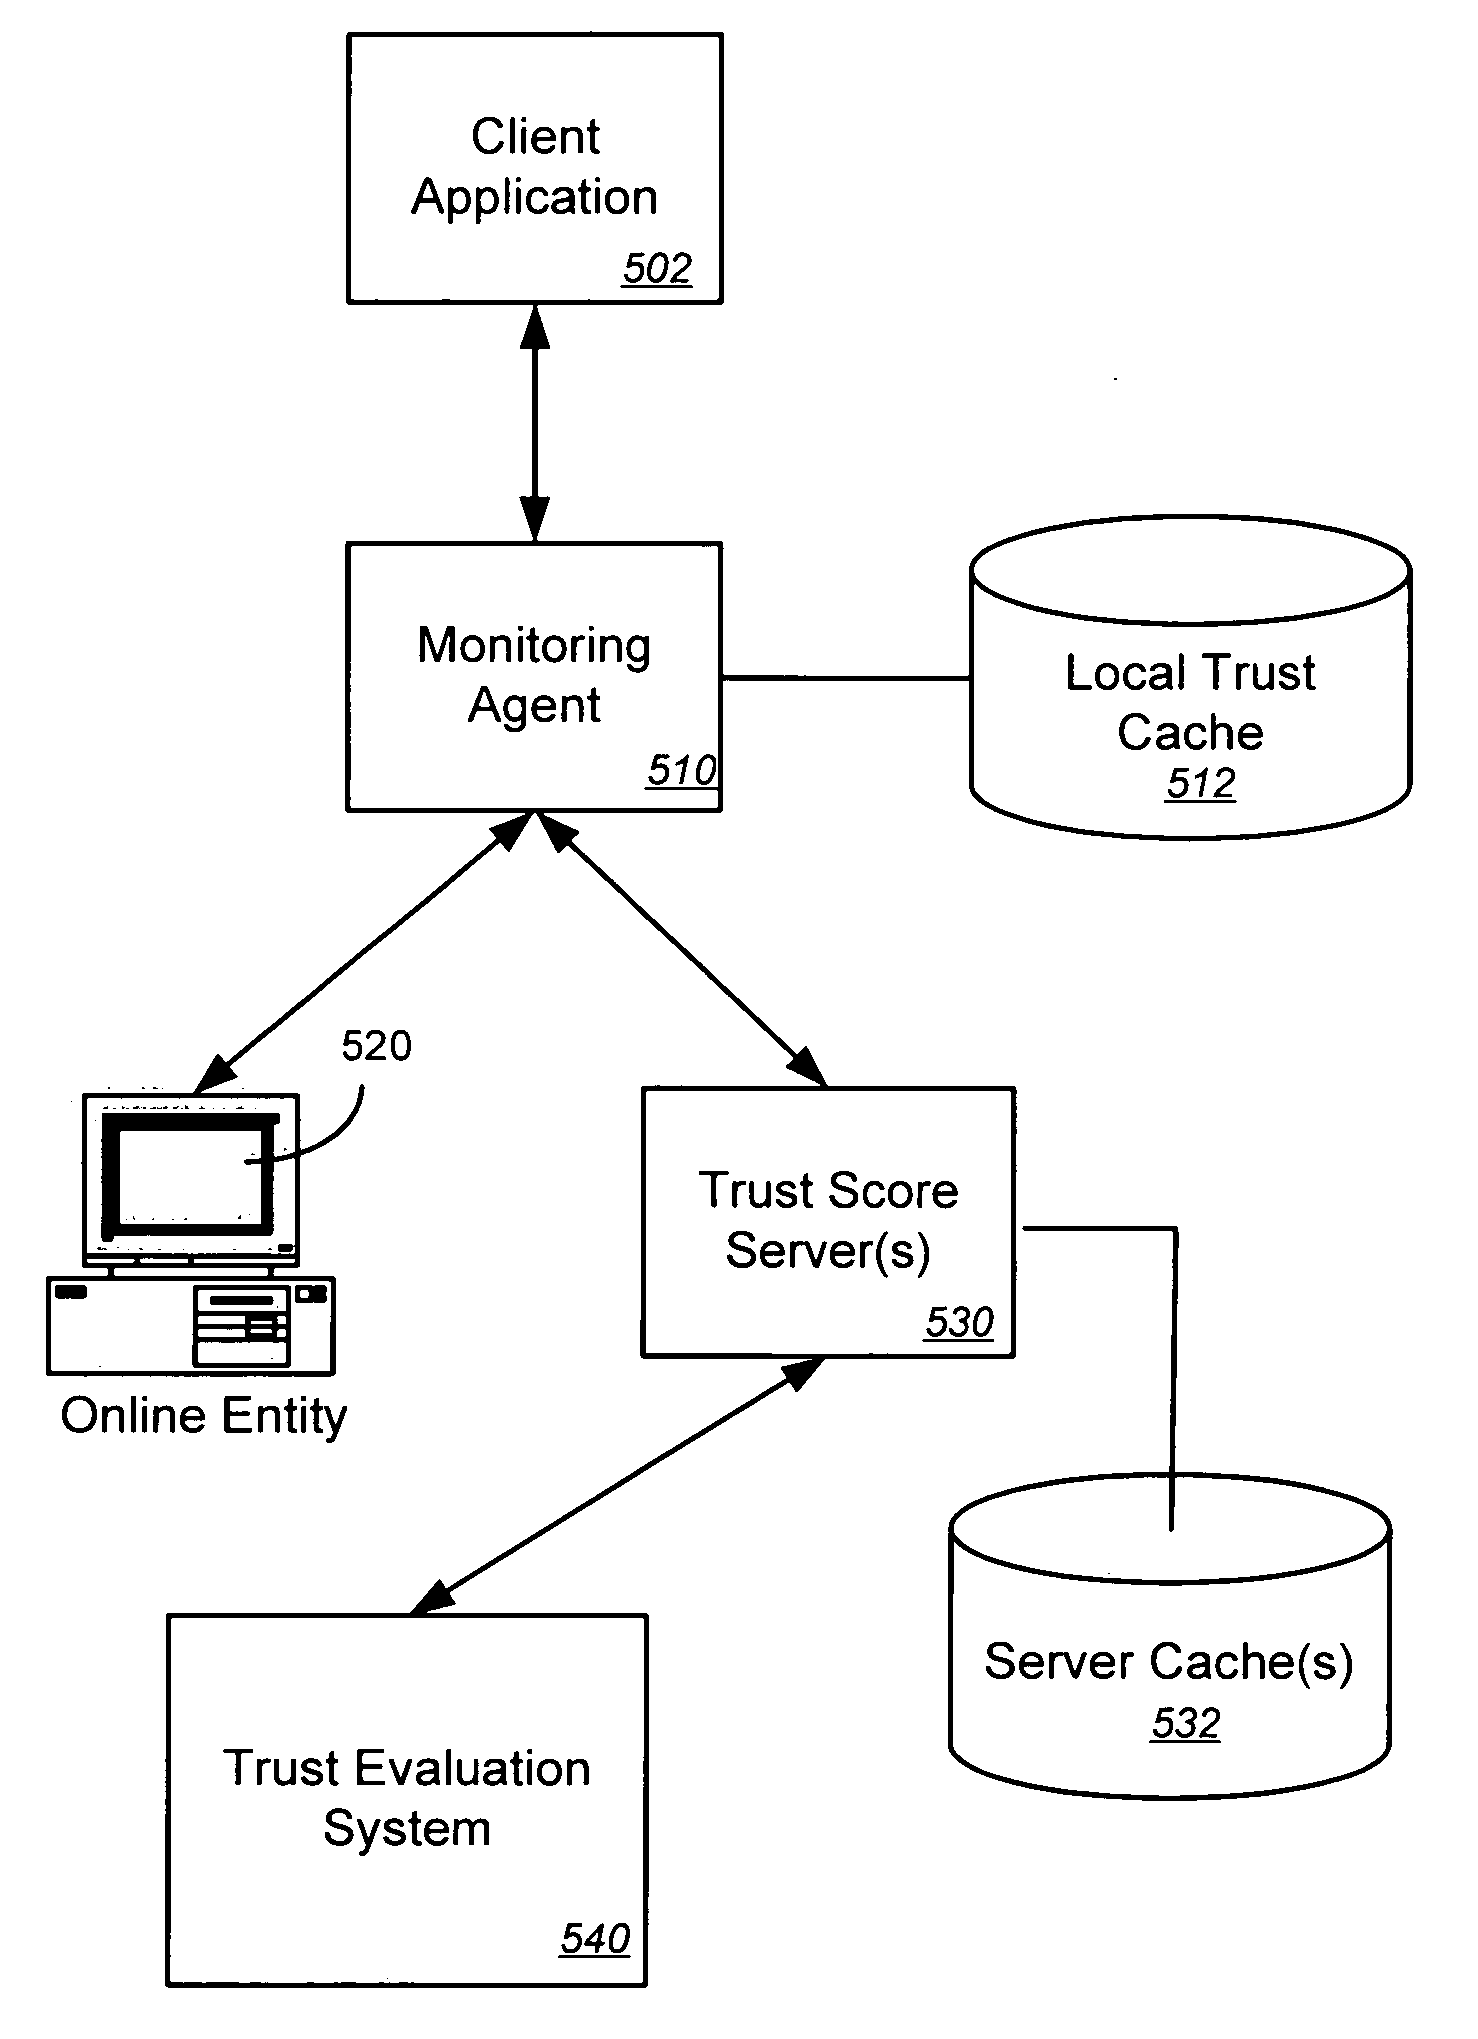 Distribution of trust data